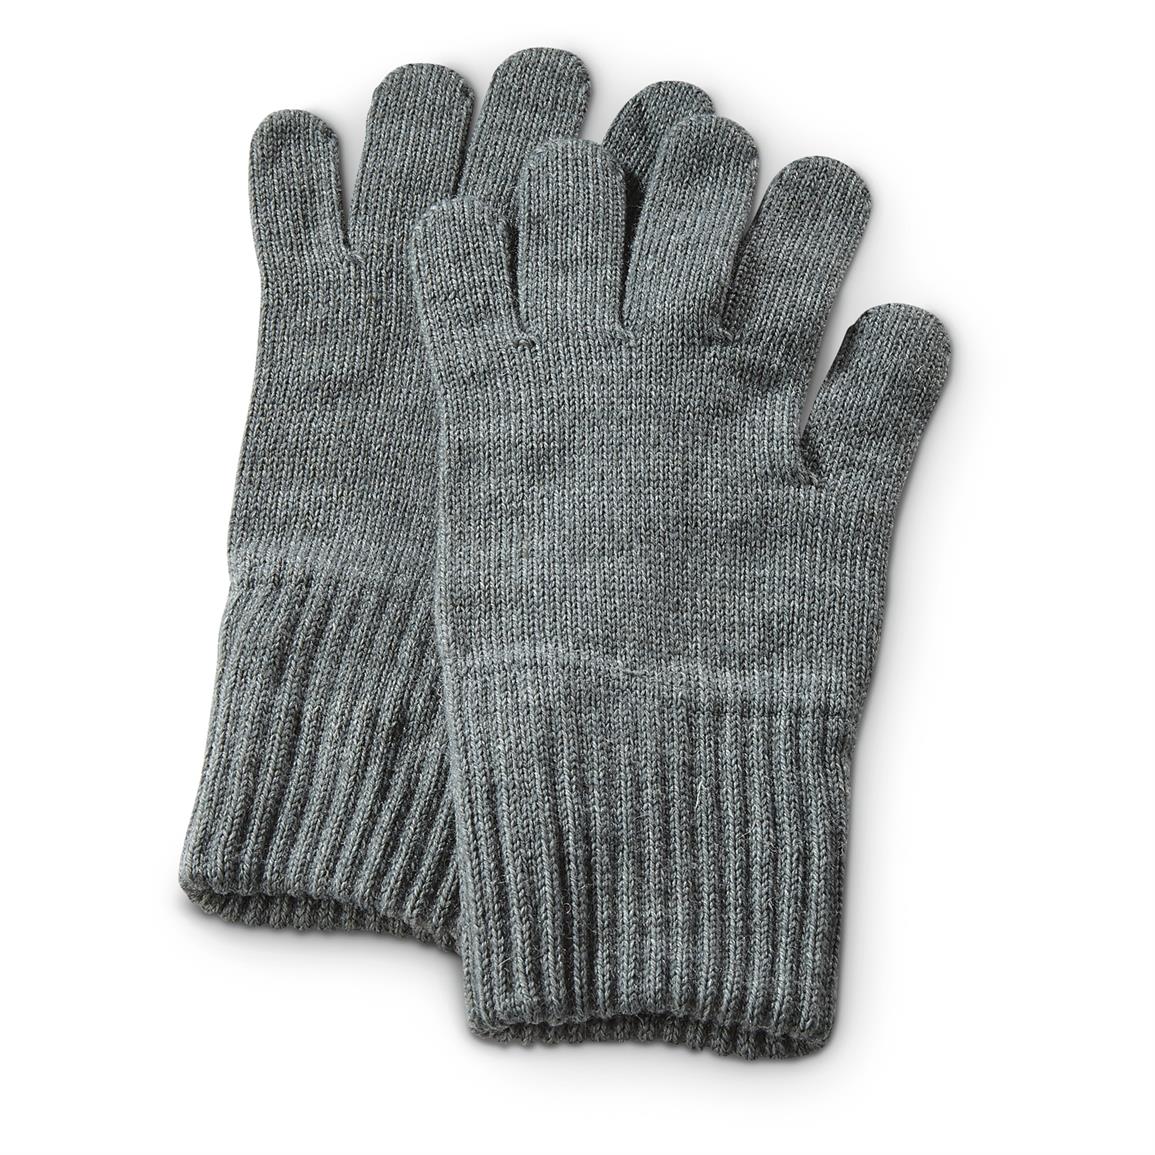 Swiss Military Surplus Wool Gloves, 3 Pack, New